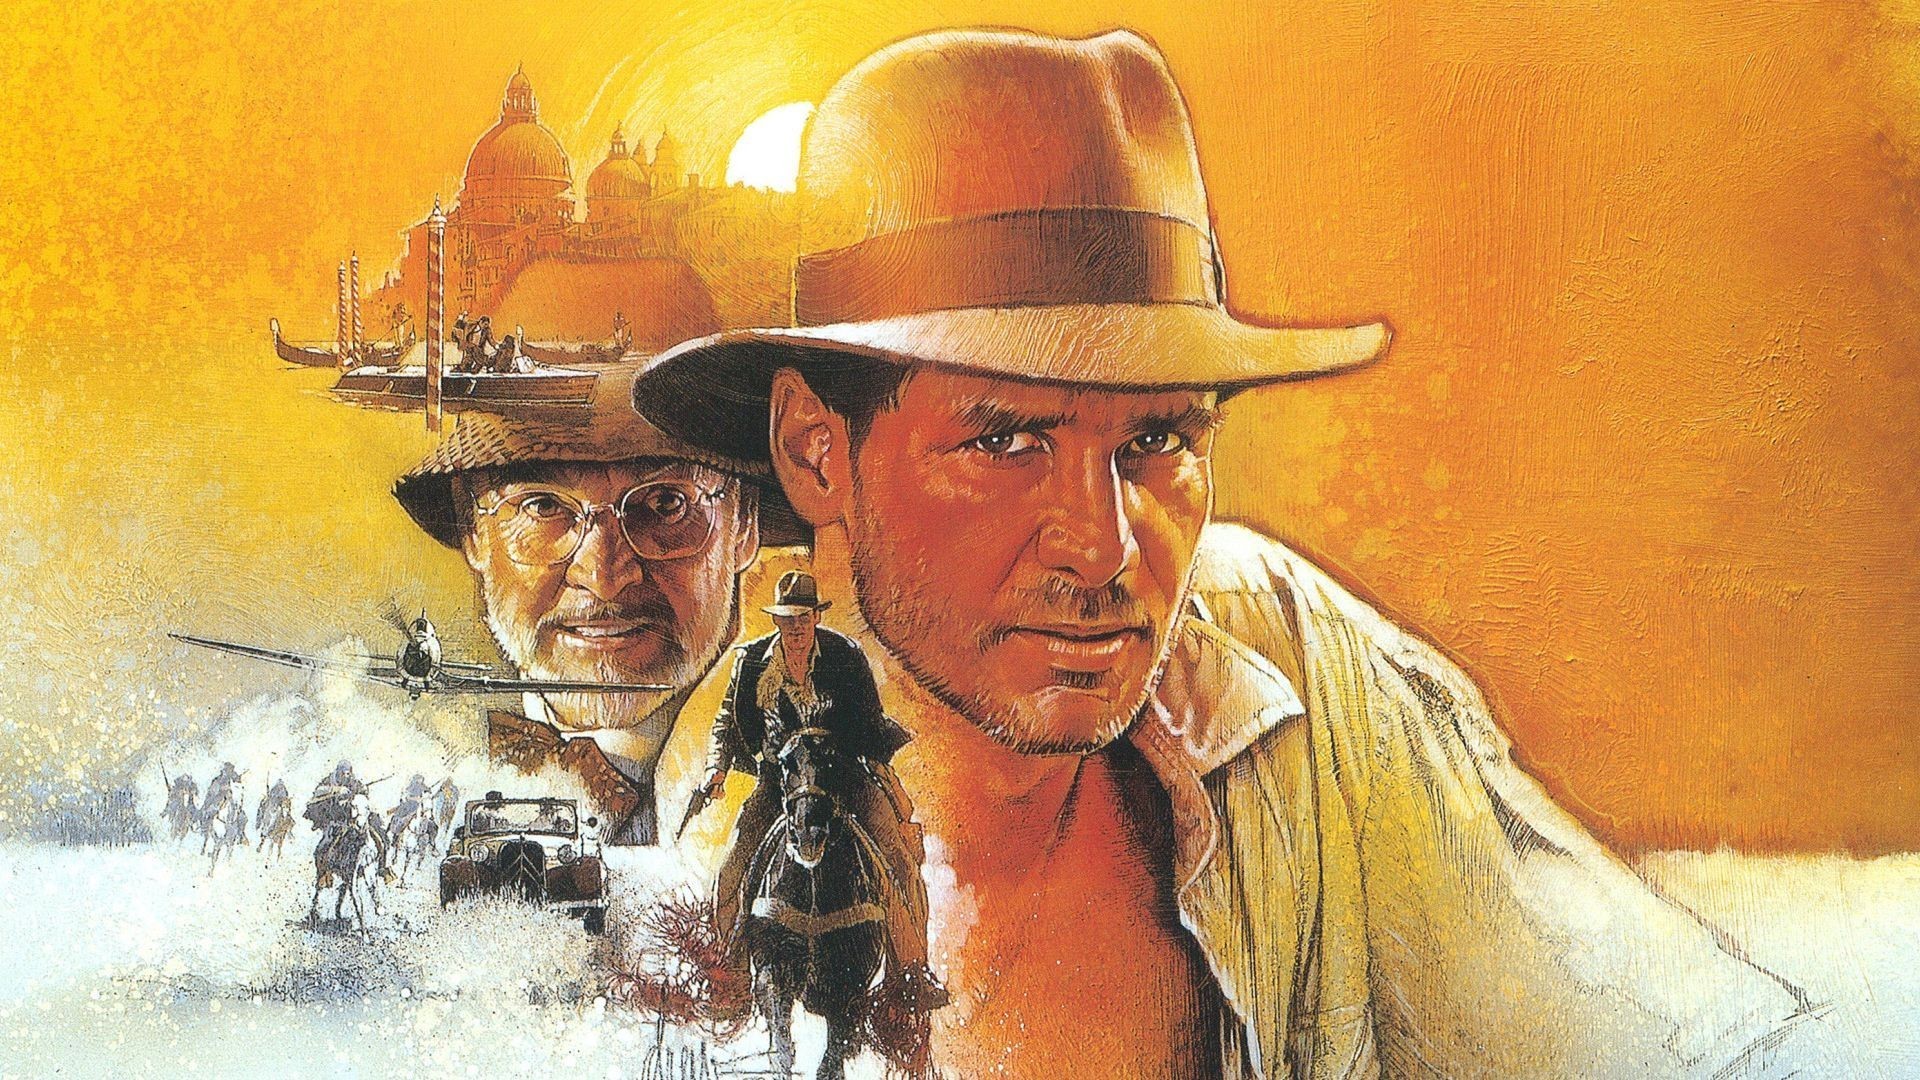 Indiana Jones HD Wallpaper and Background